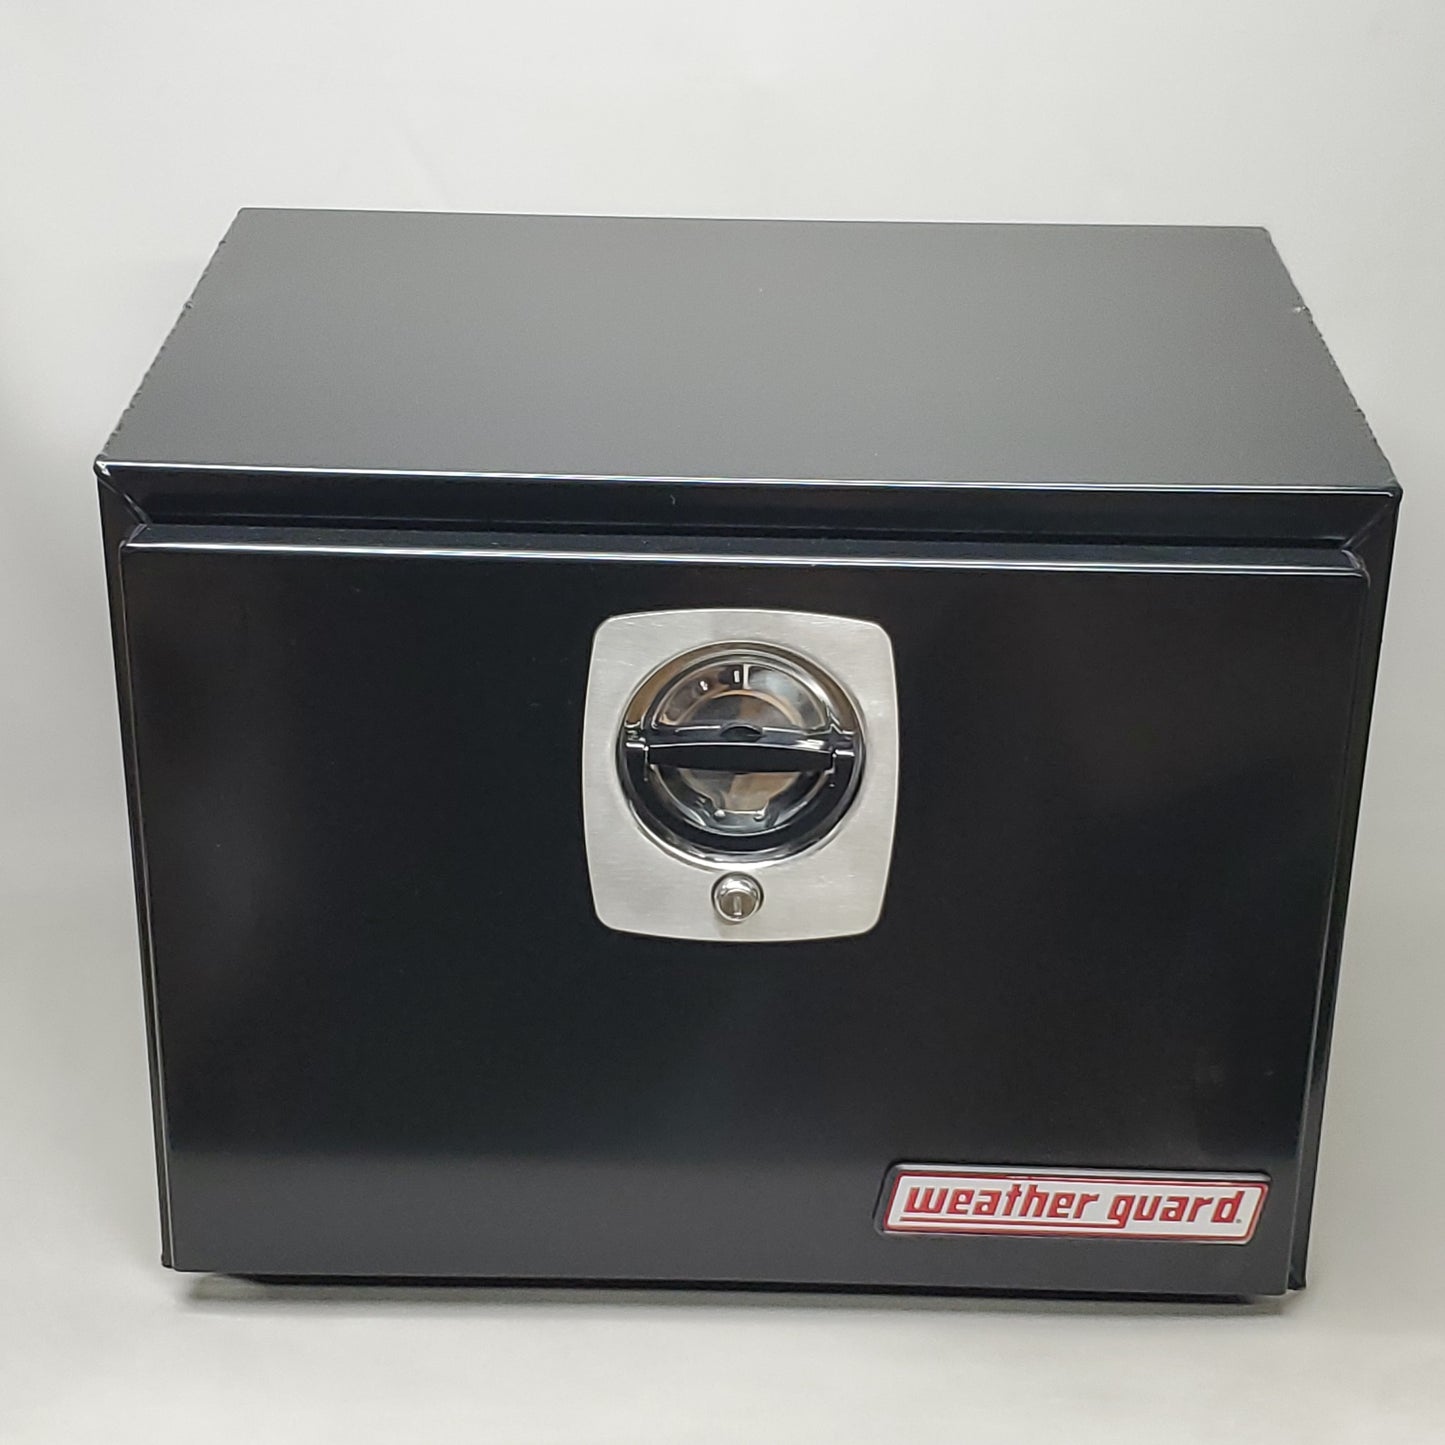 WEATHER GUARD Steel Underbed Tool Storage Box Black 25"X19"X19" 524-5-02 MSRP $494 (New)